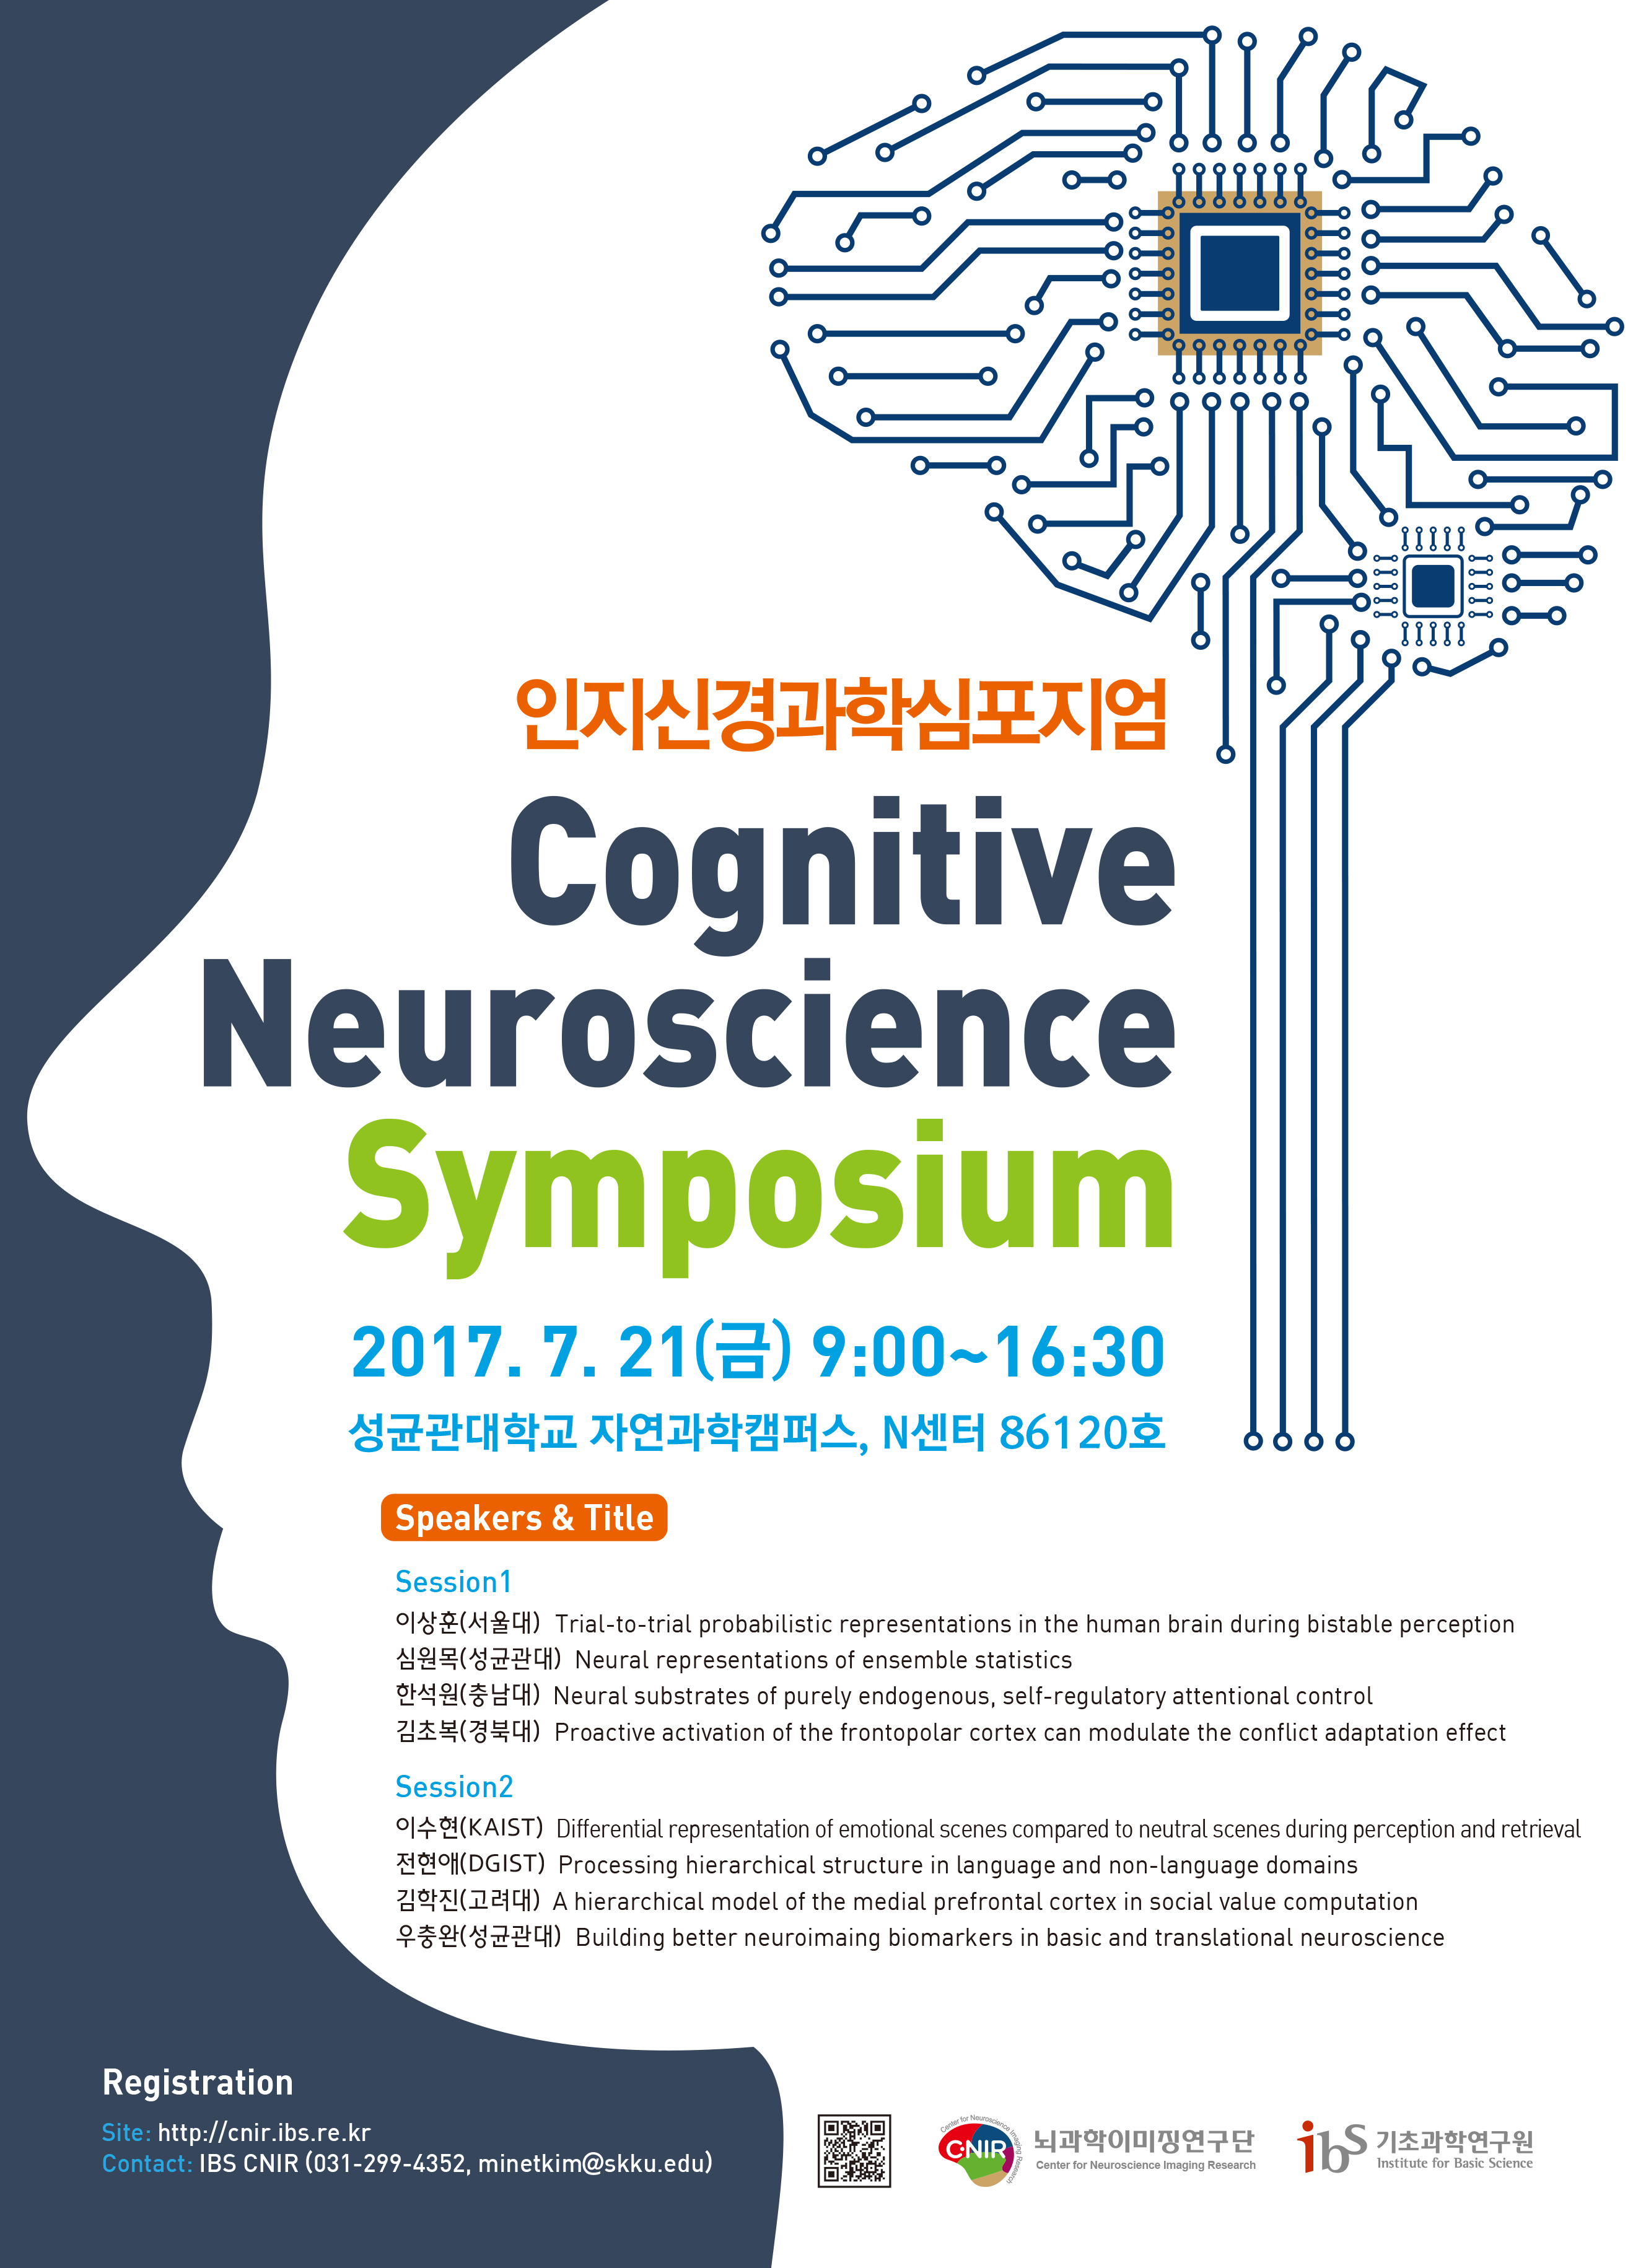 Cognitive Neuroscience Symposium(인지신경과학심포지엄) 개최